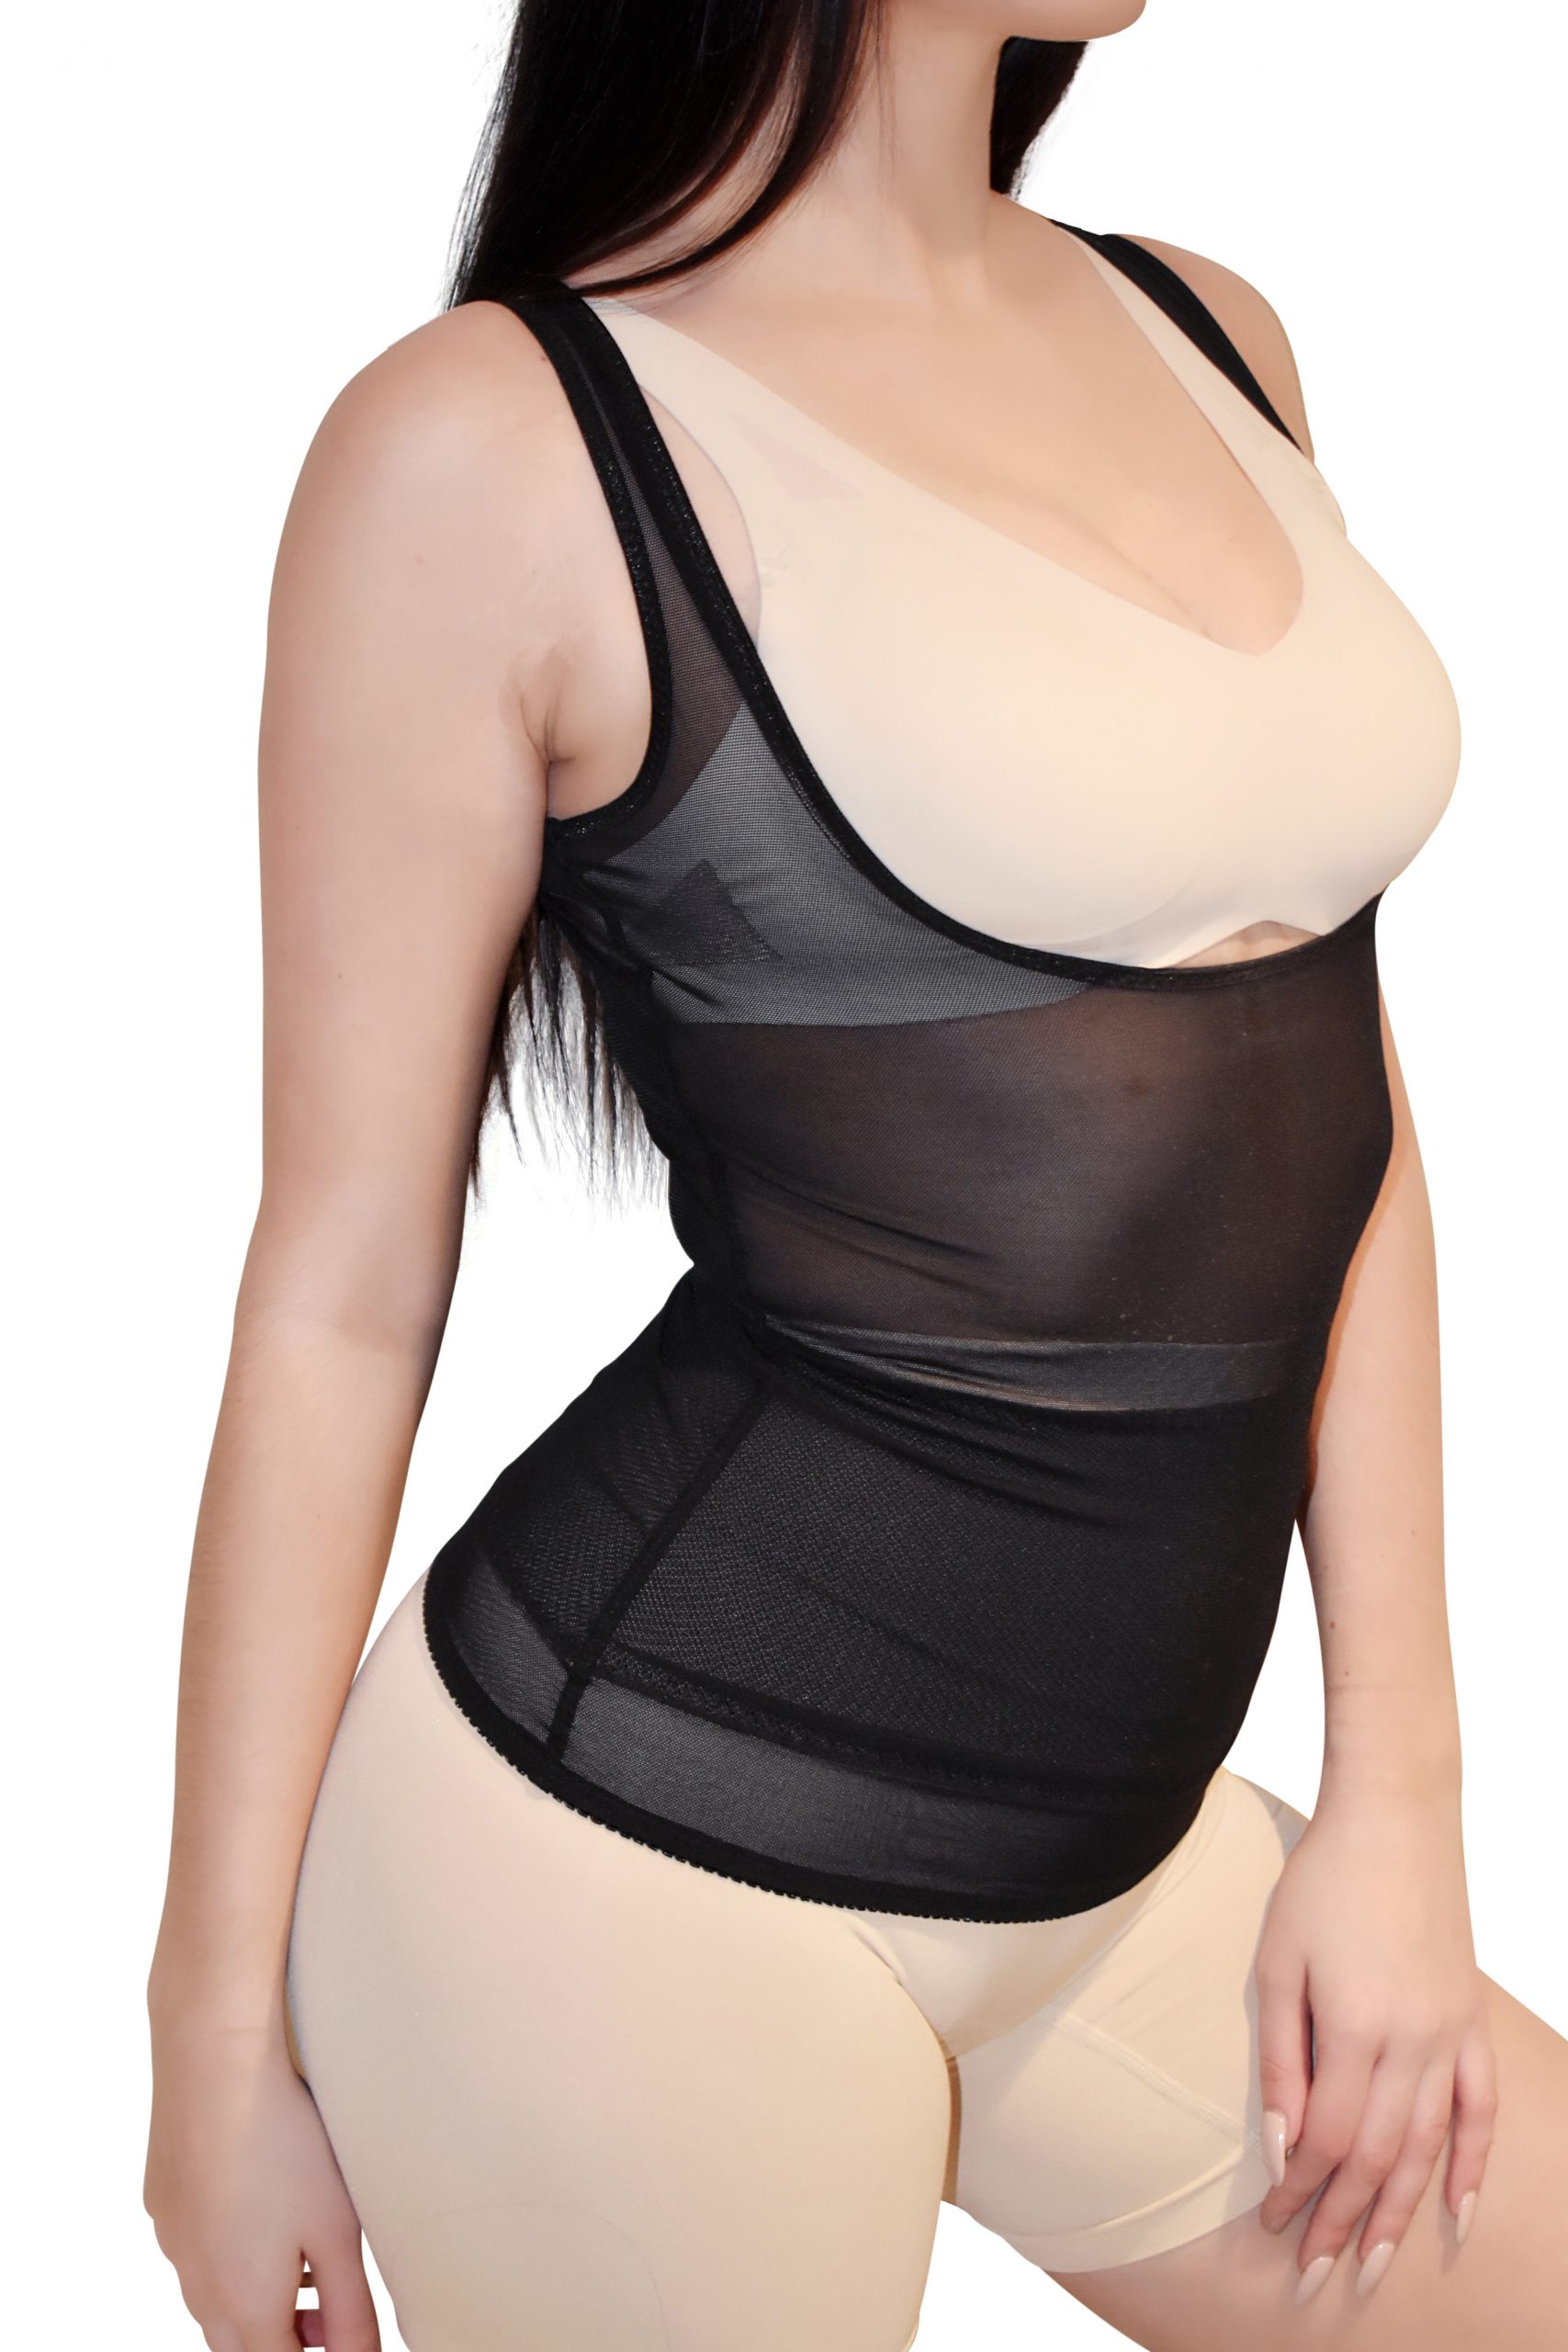 KYMARO, Intimates & Sleepwear, Nwt Kymaro New Body Shaper Top In Black 3x